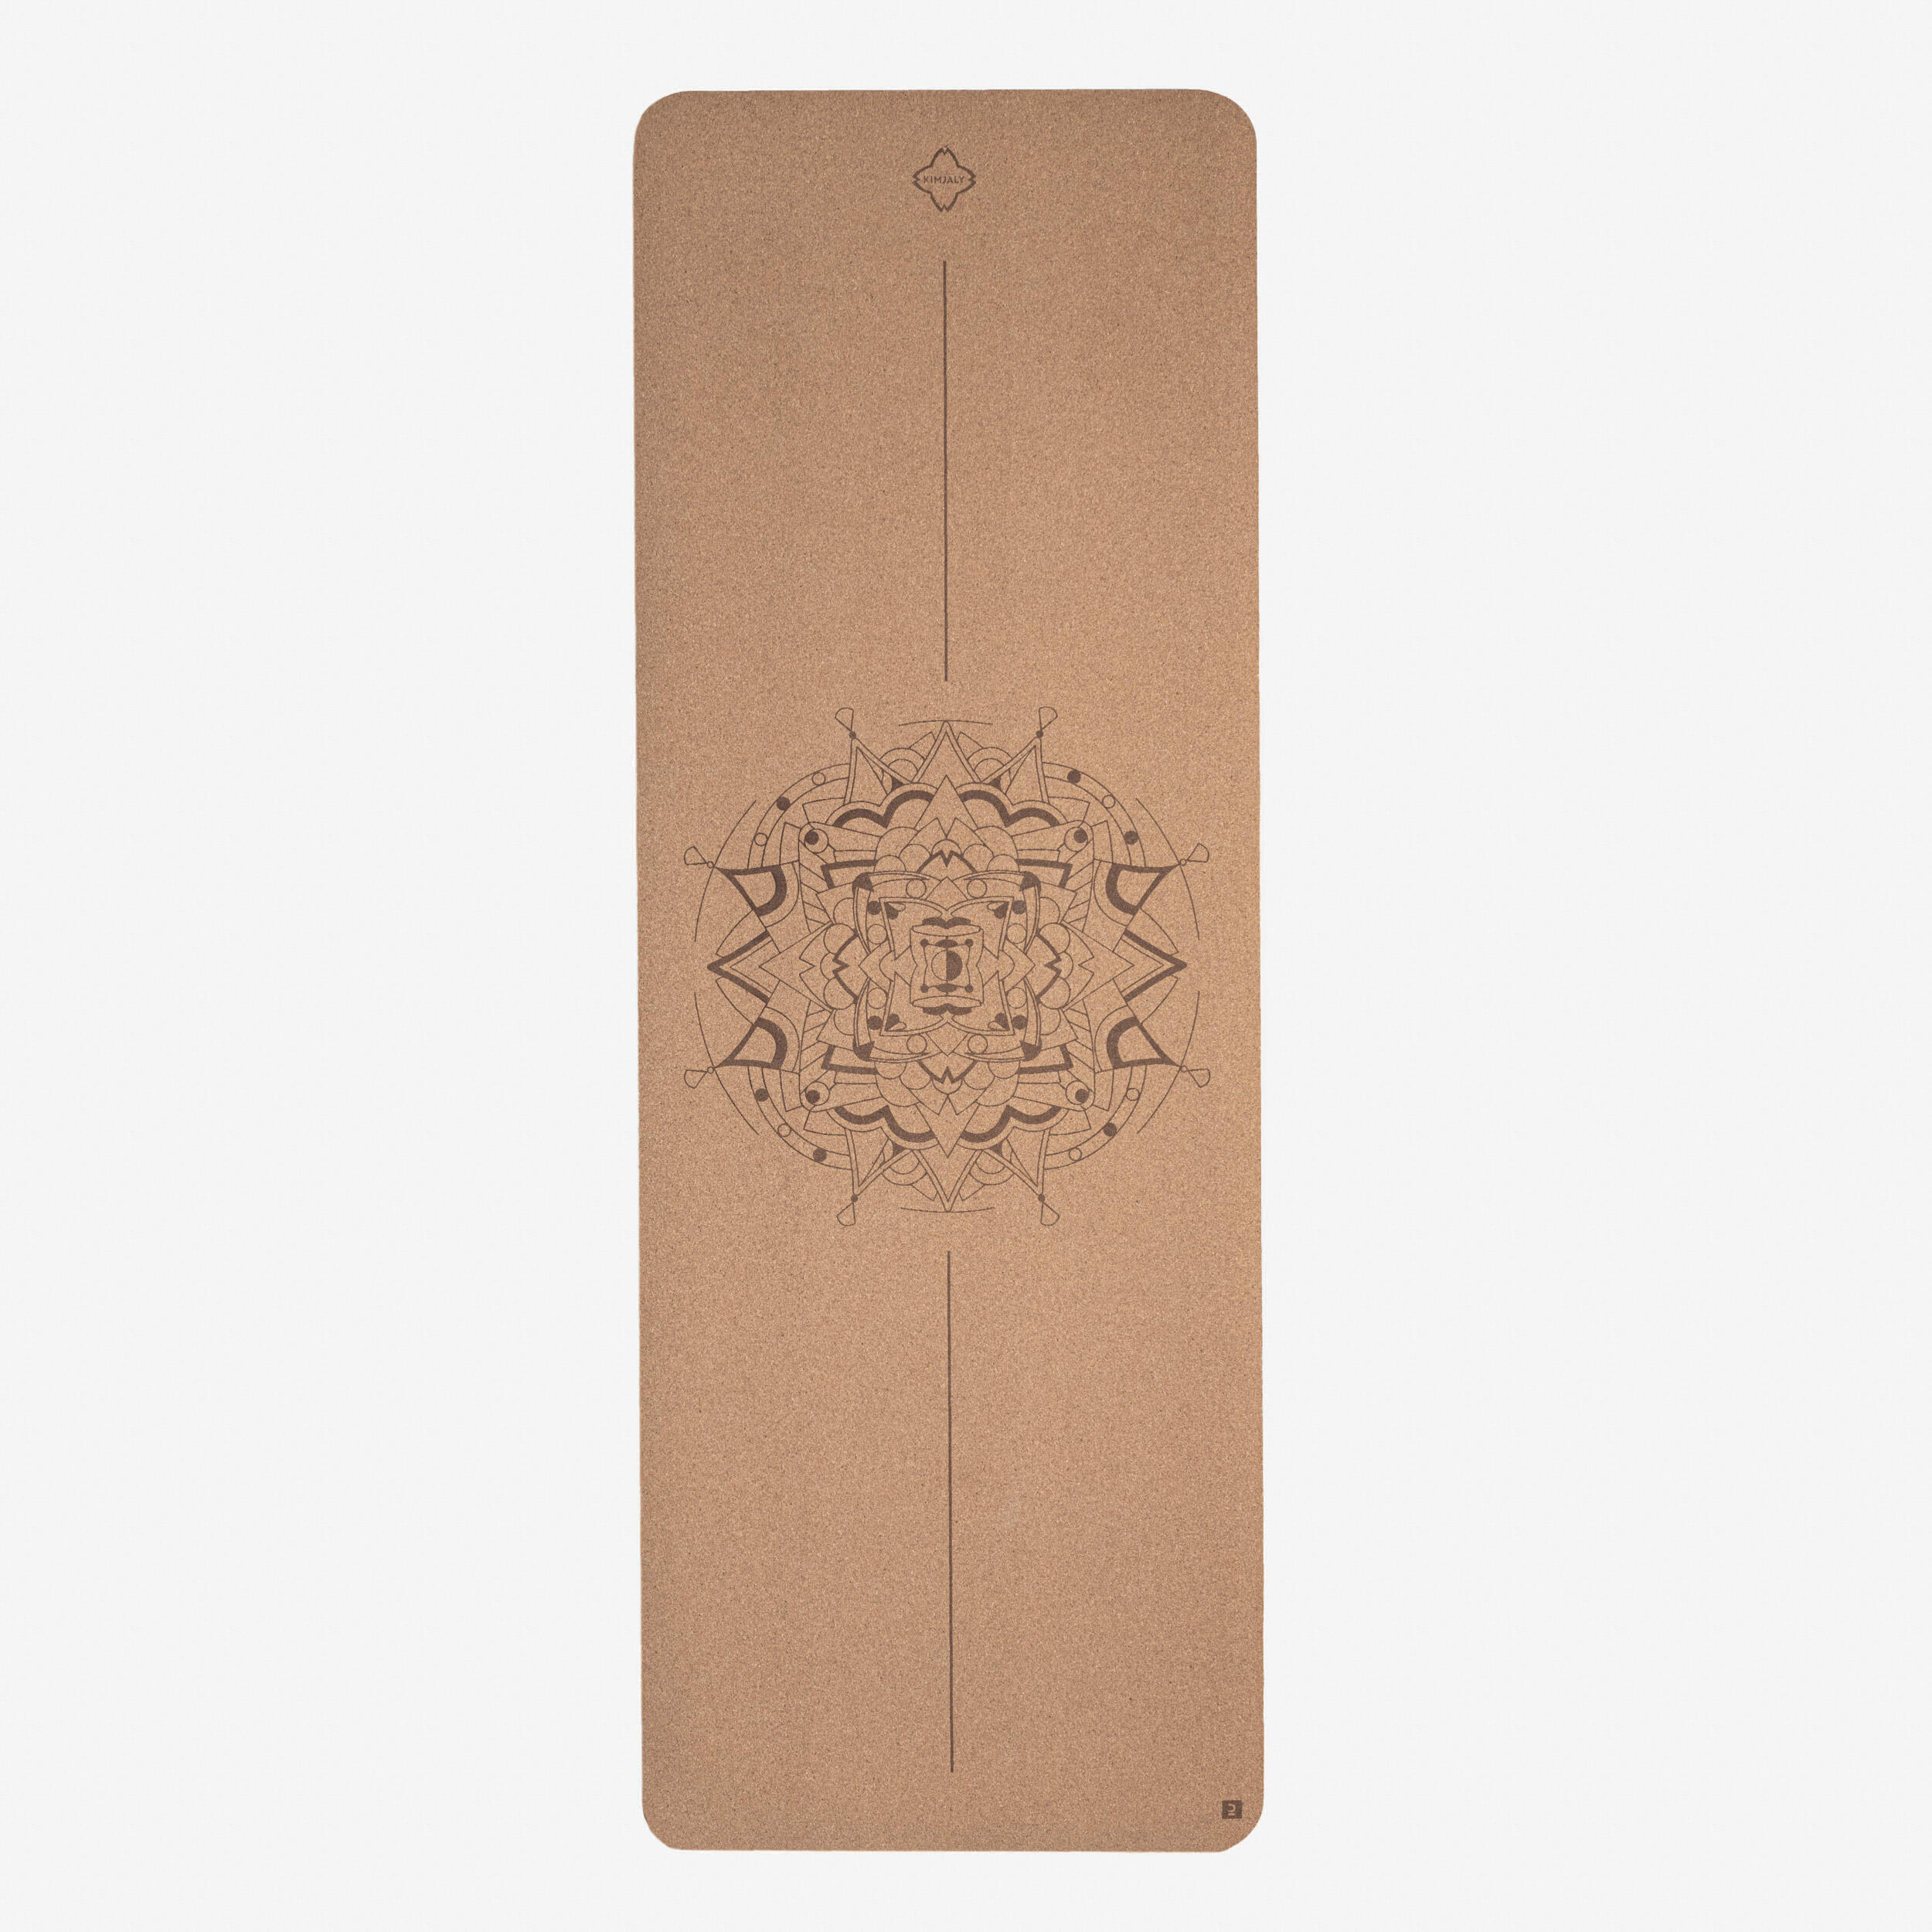 Foldable Travel Yoga Mat / Mat Cover 180 cm ⨯ 62 cm ⨯ 1.33 mm - Grey  KIMJALY